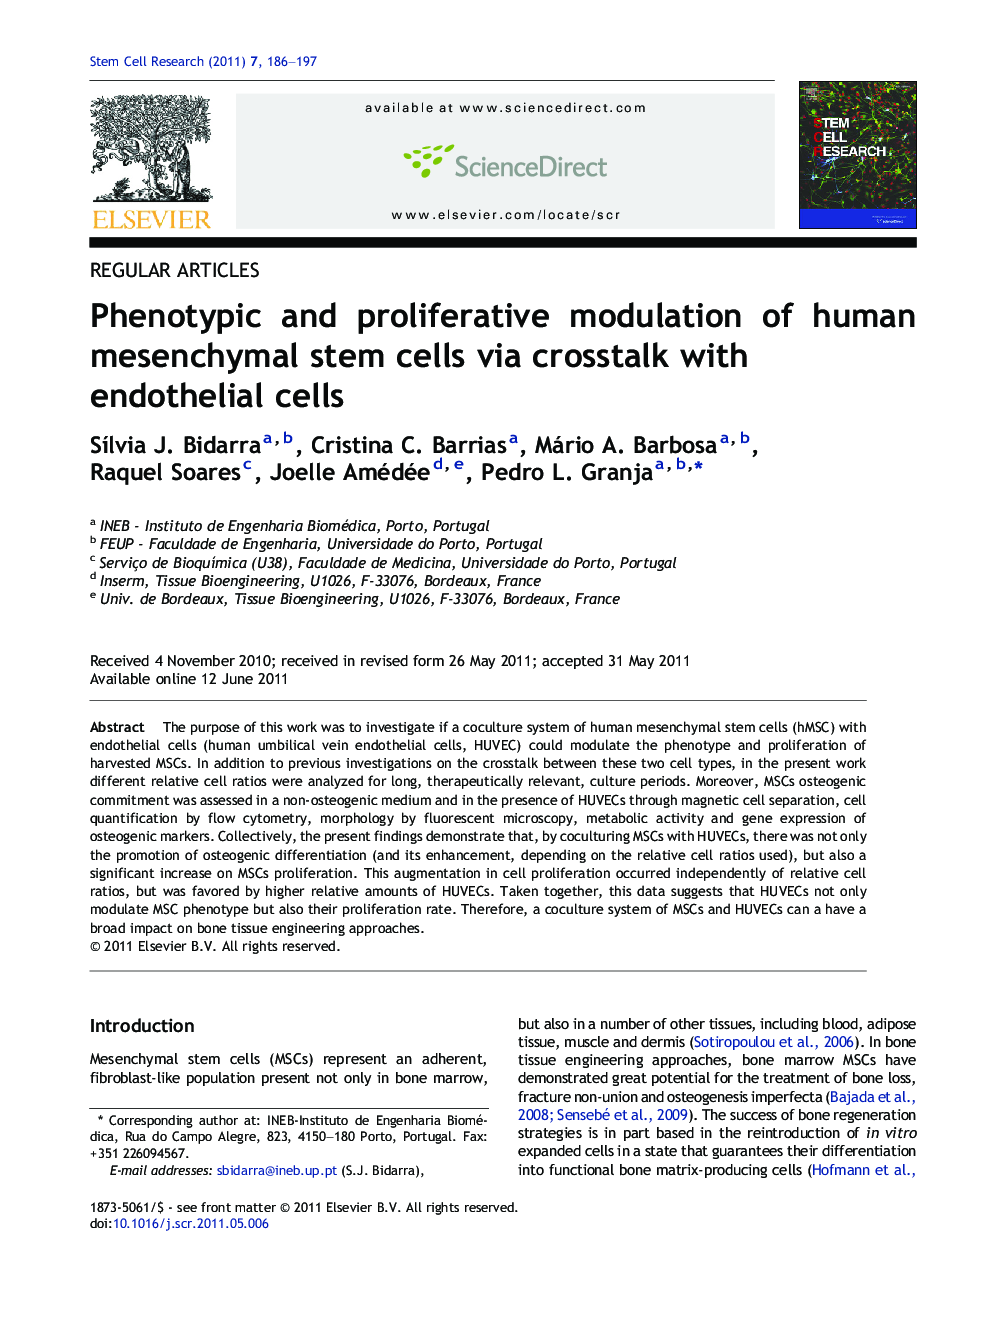 Phenotypic and proliferative modulation of human mesenchymal stem cells via crosstalk with endothelial cells